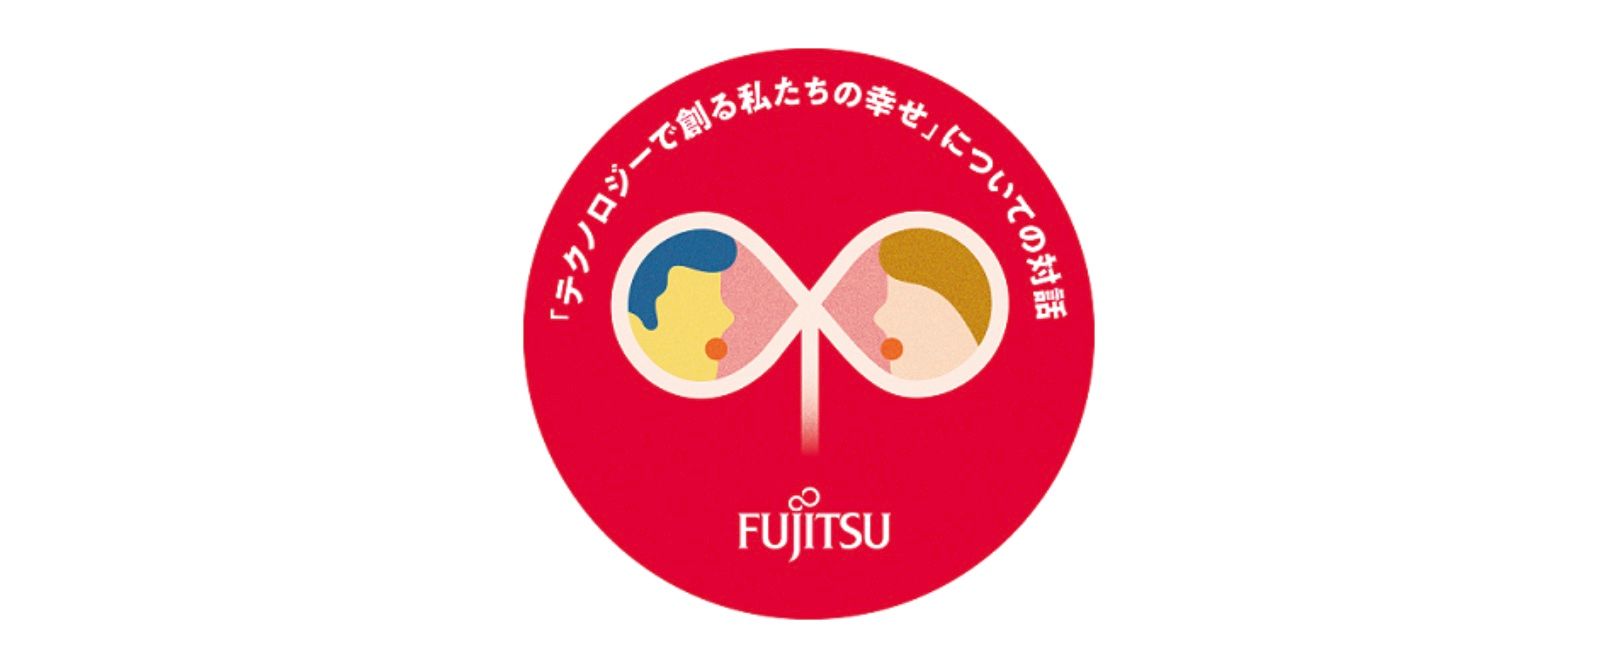 Fujitsu141223Fig1.jpg